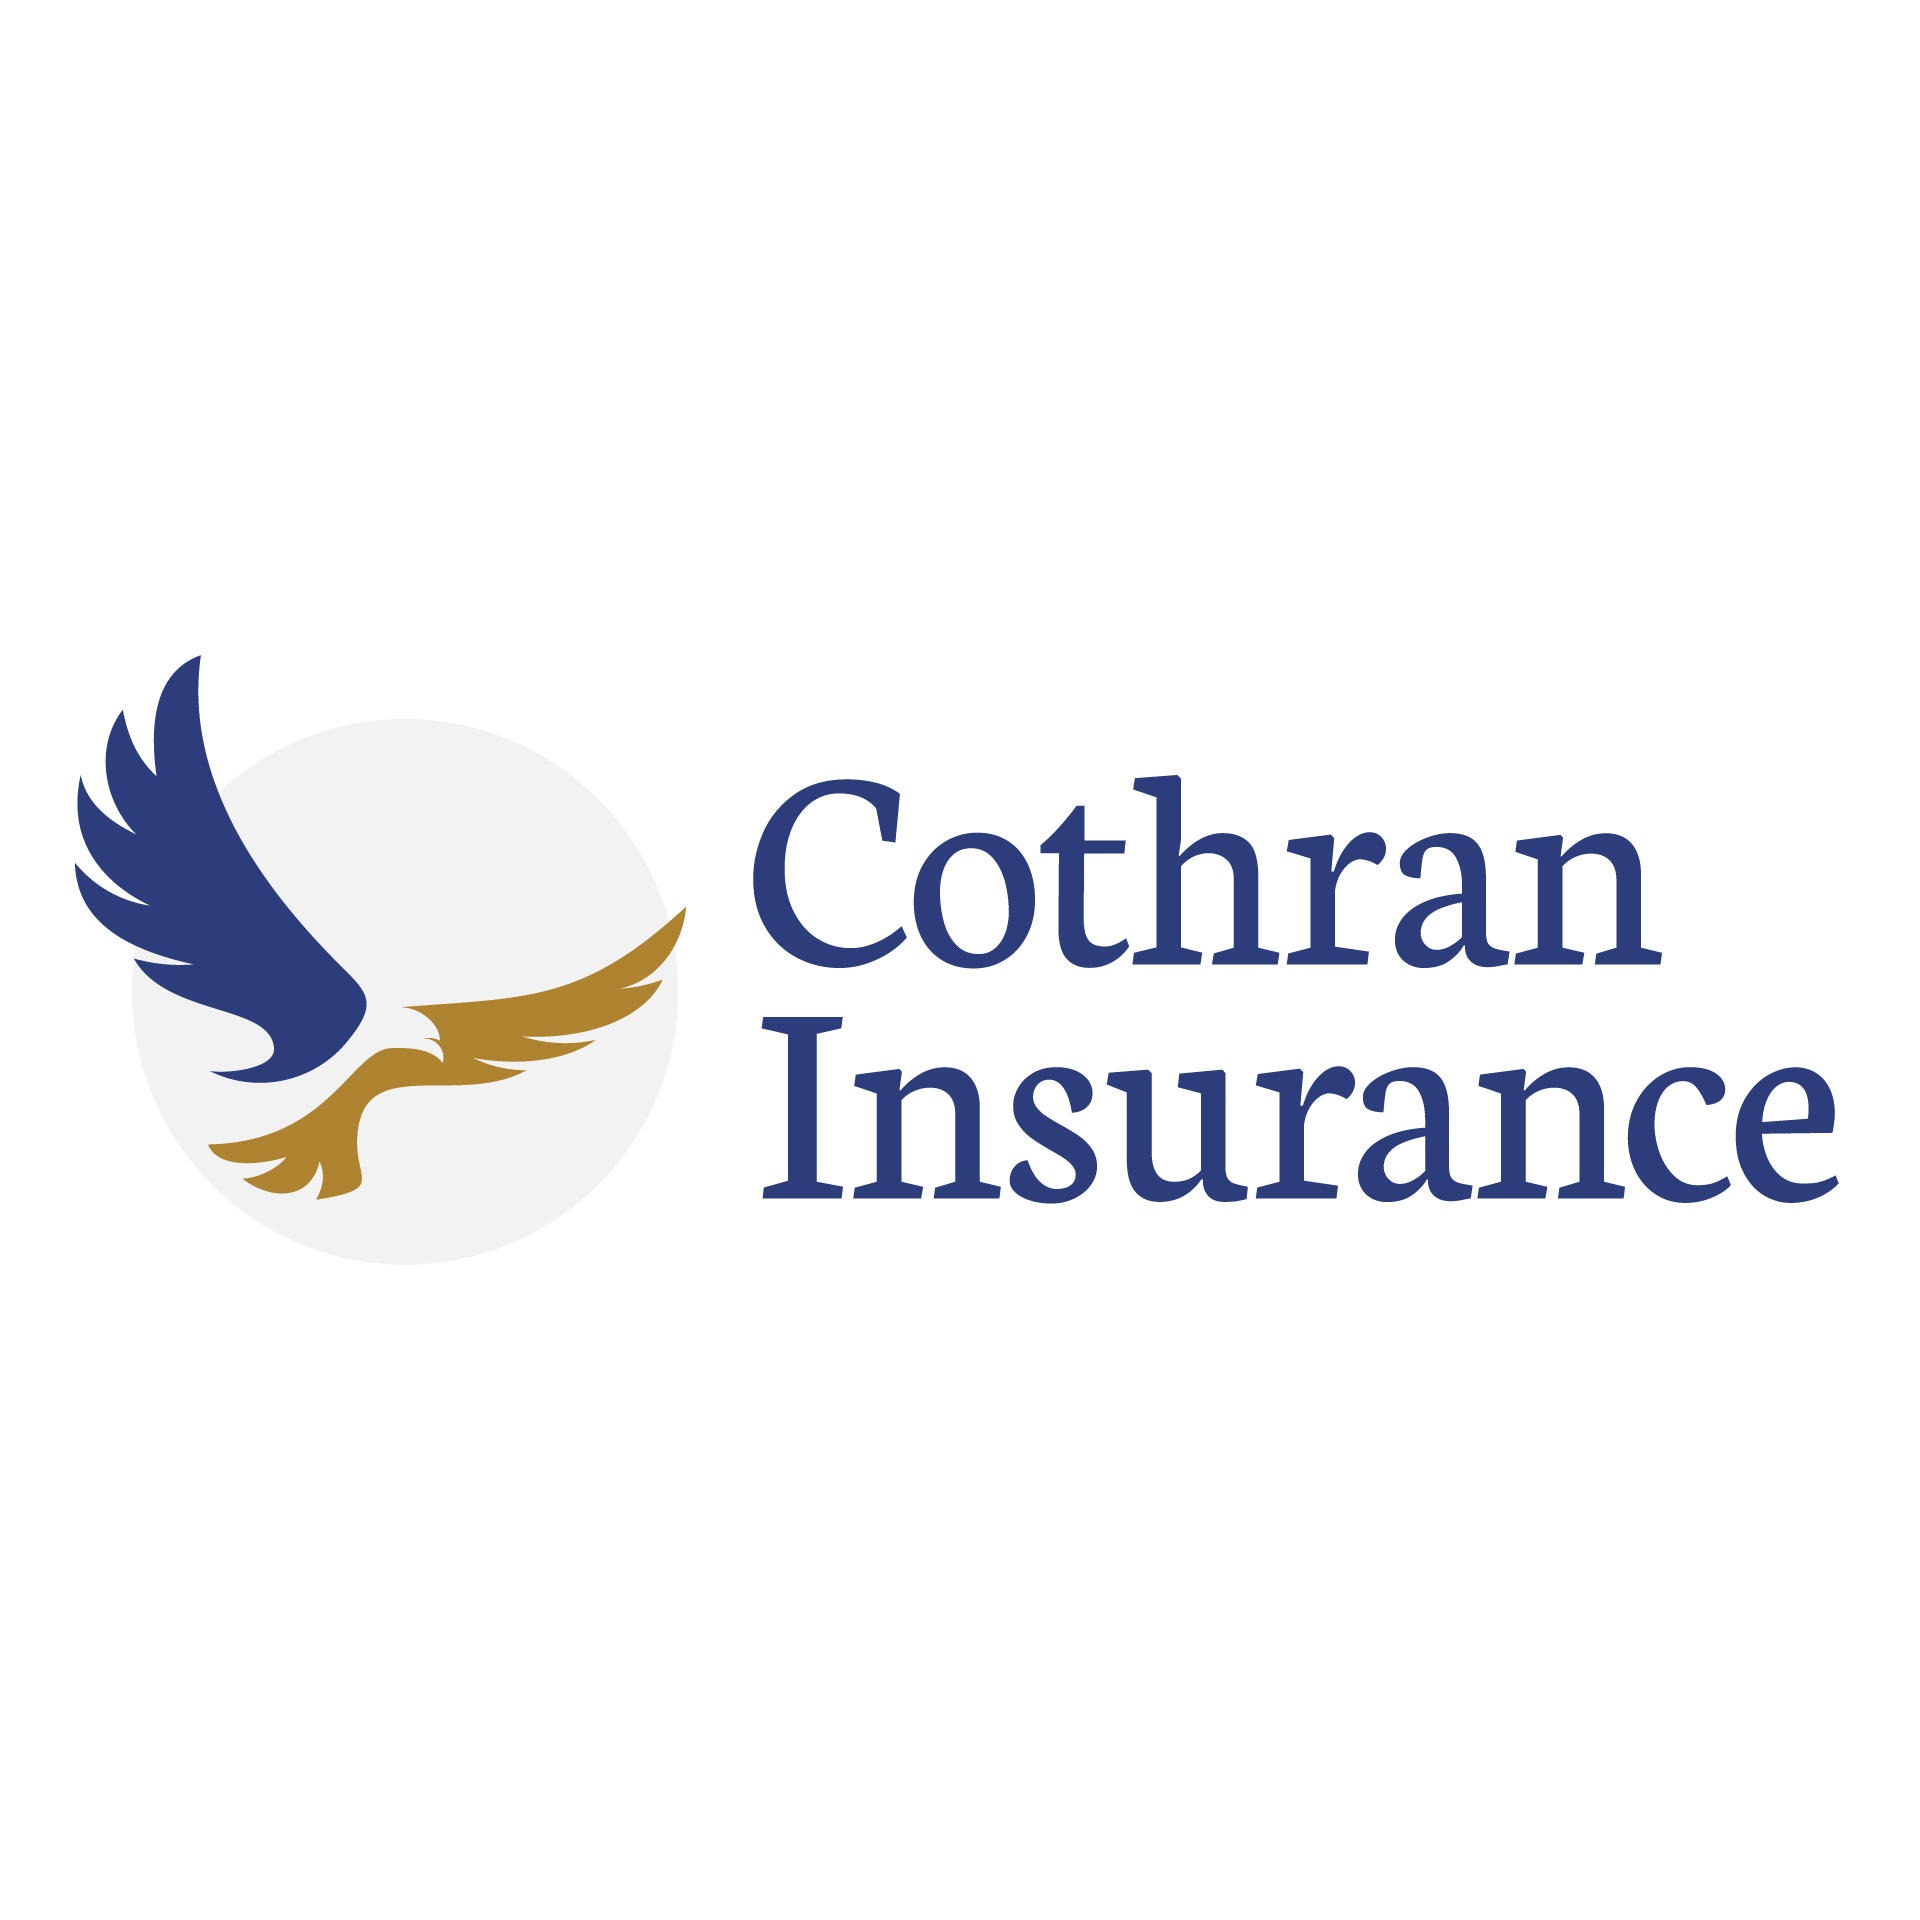 Cothran Insurance